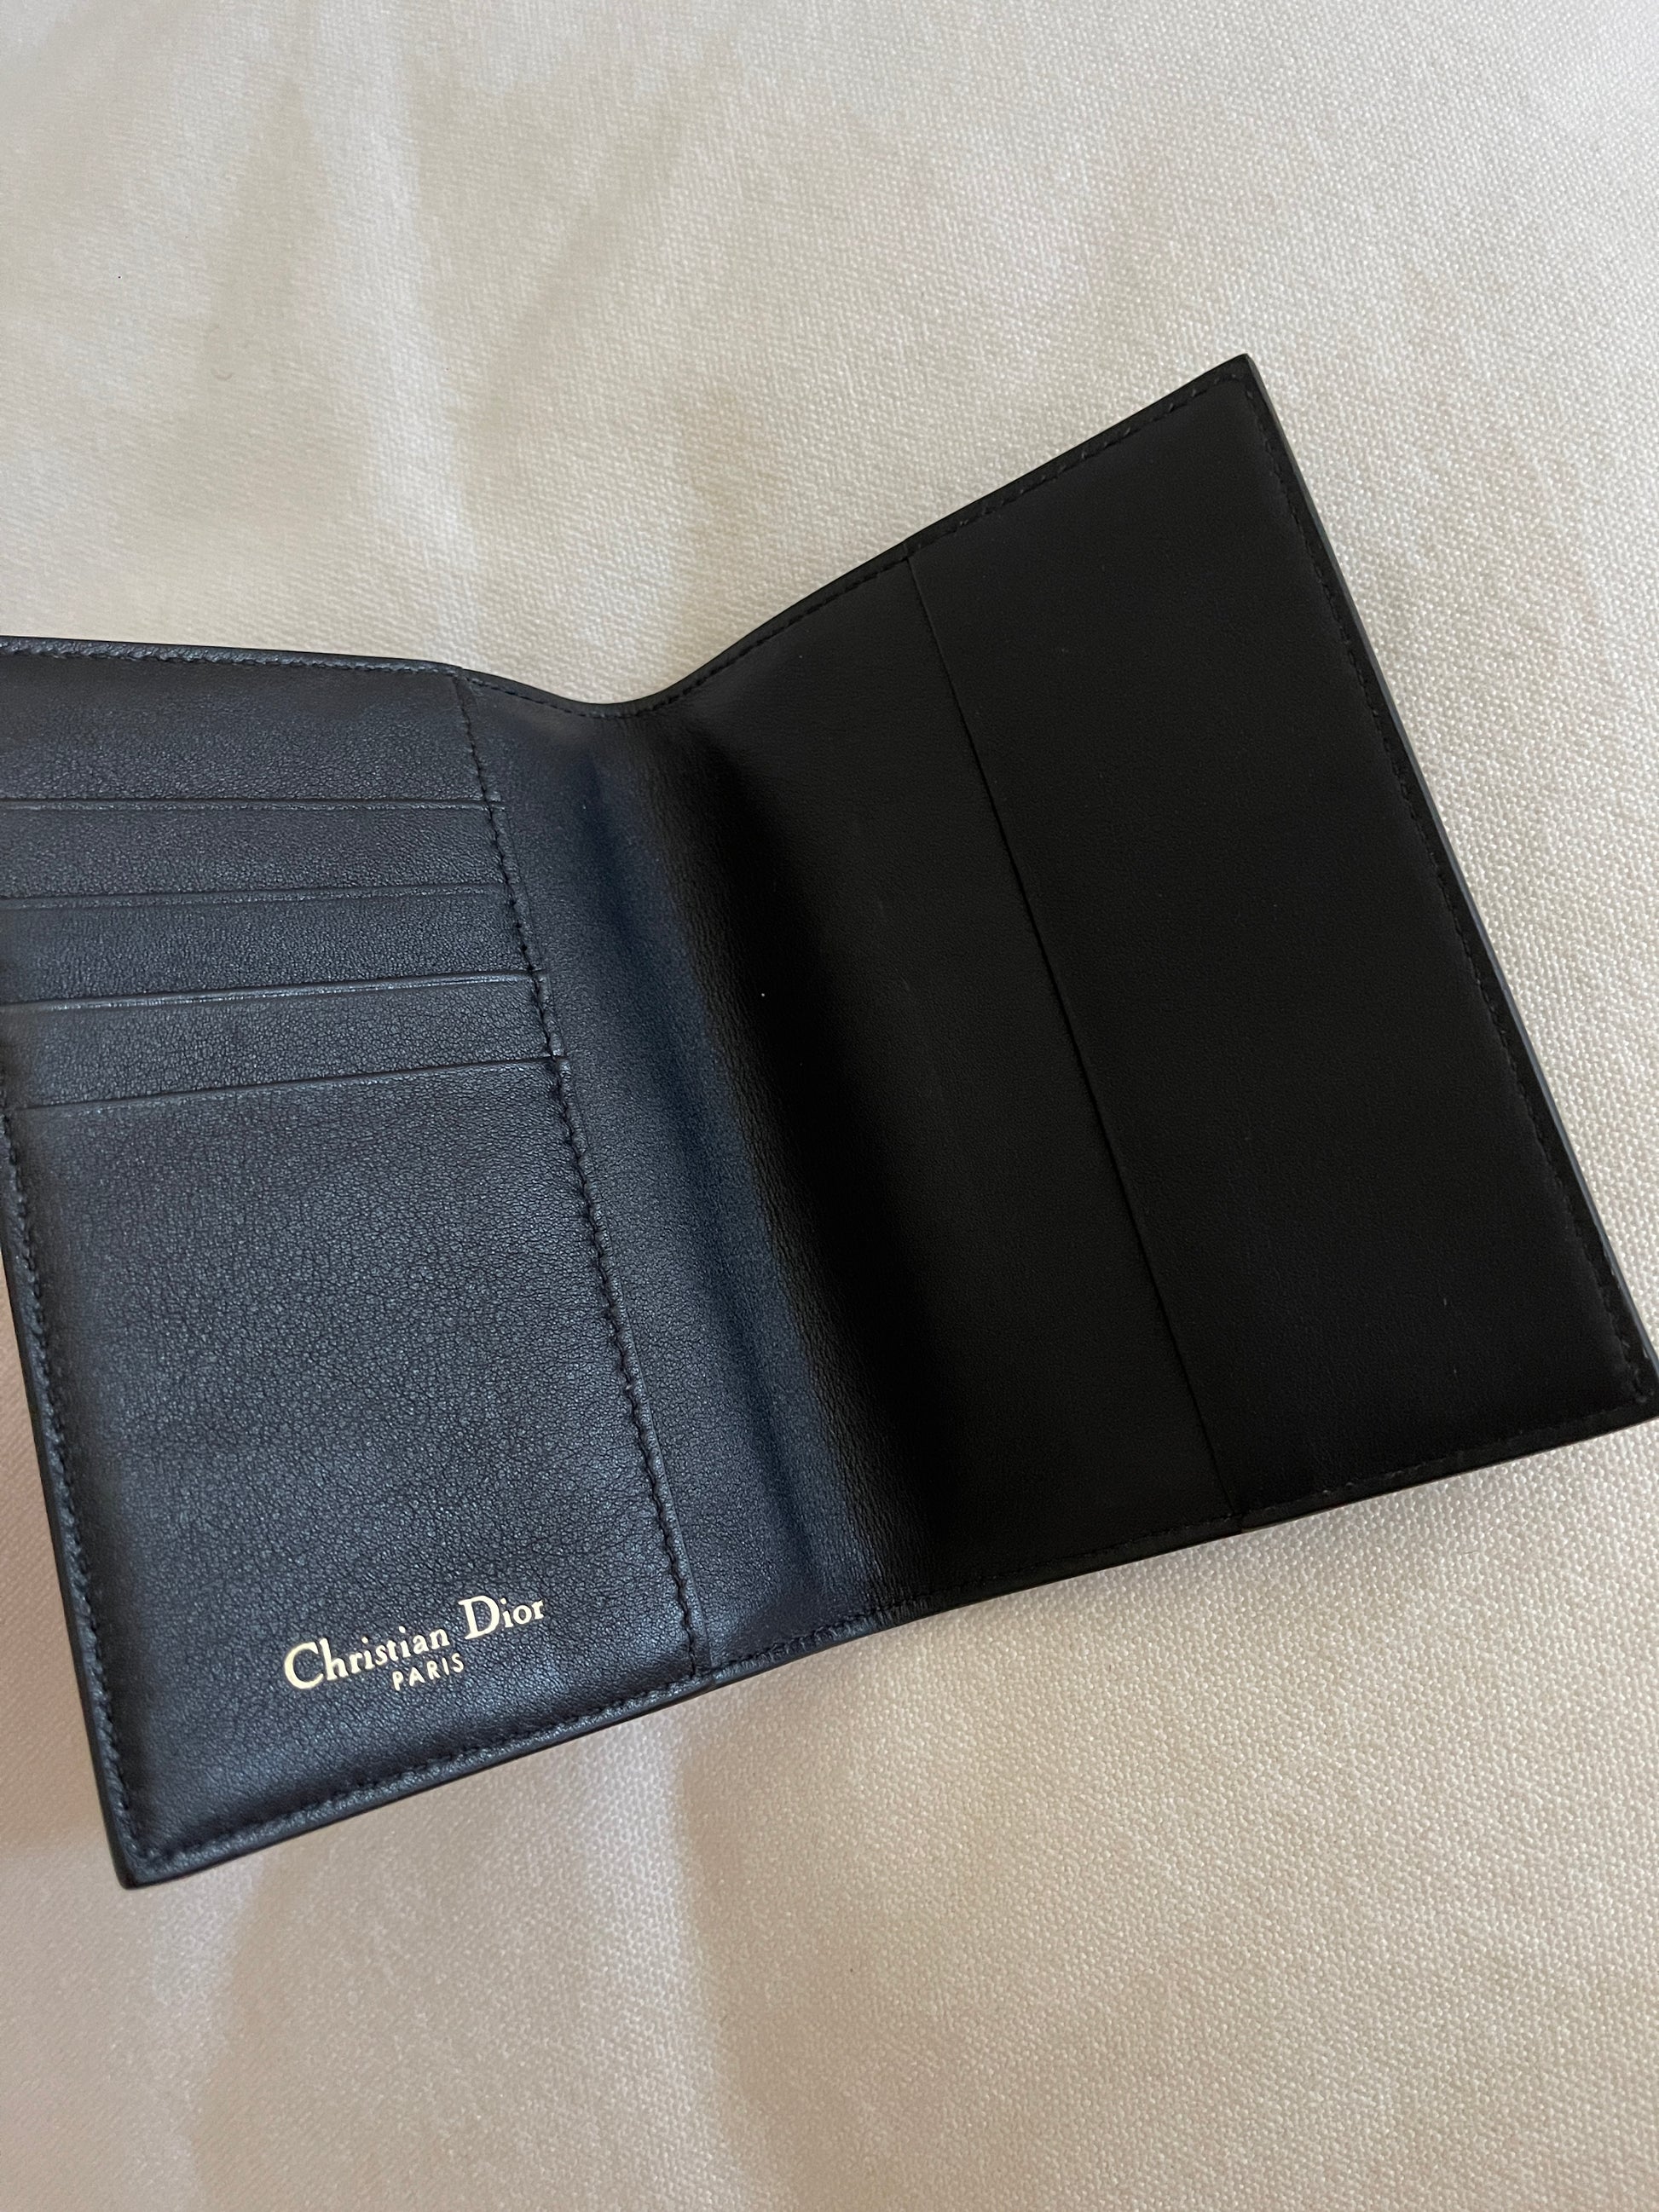 Passport Cover Beige and Black Maxi Dior Oblique Jacquard